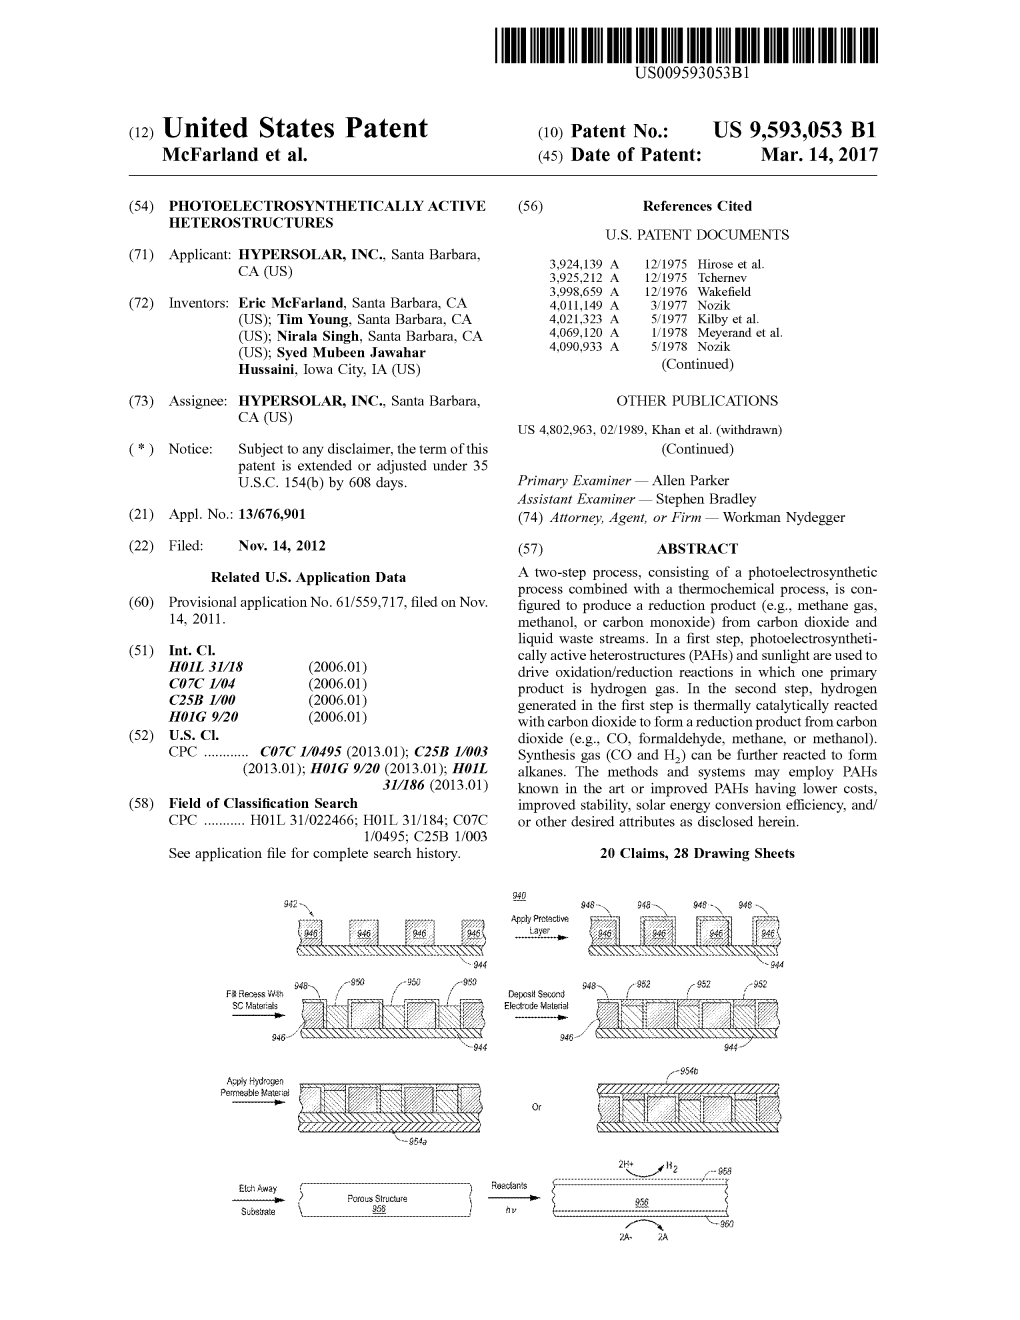 (12) United States Patent (10) Patent No.: US 9,593,053 B1 Mcfarland Et Al